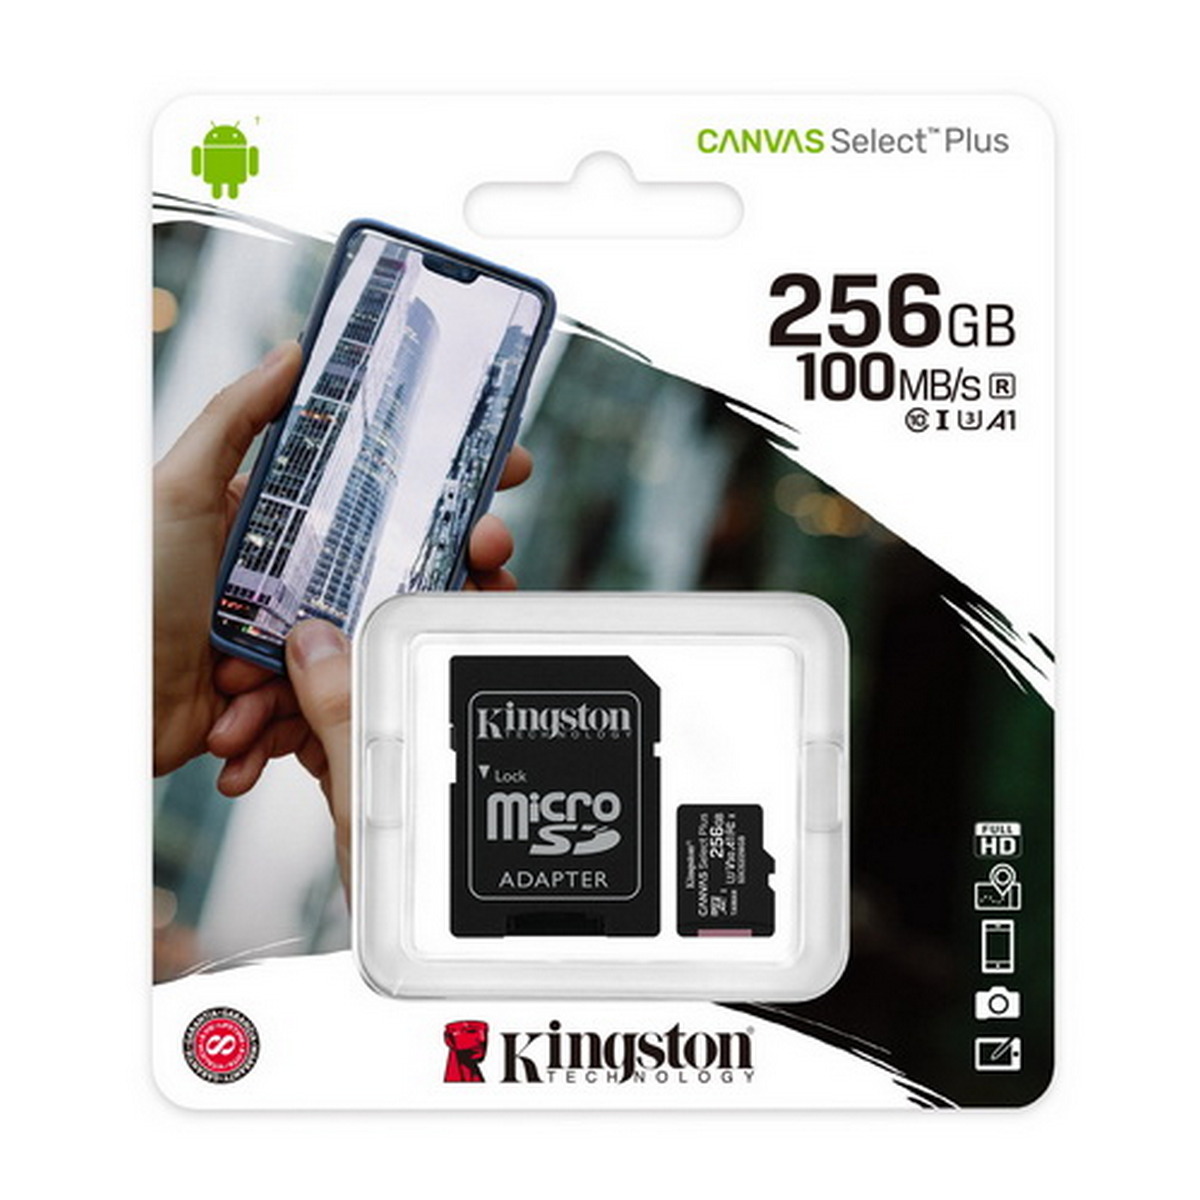 KINGSTON Micro SD Card (256GB) Canvas Select Plus